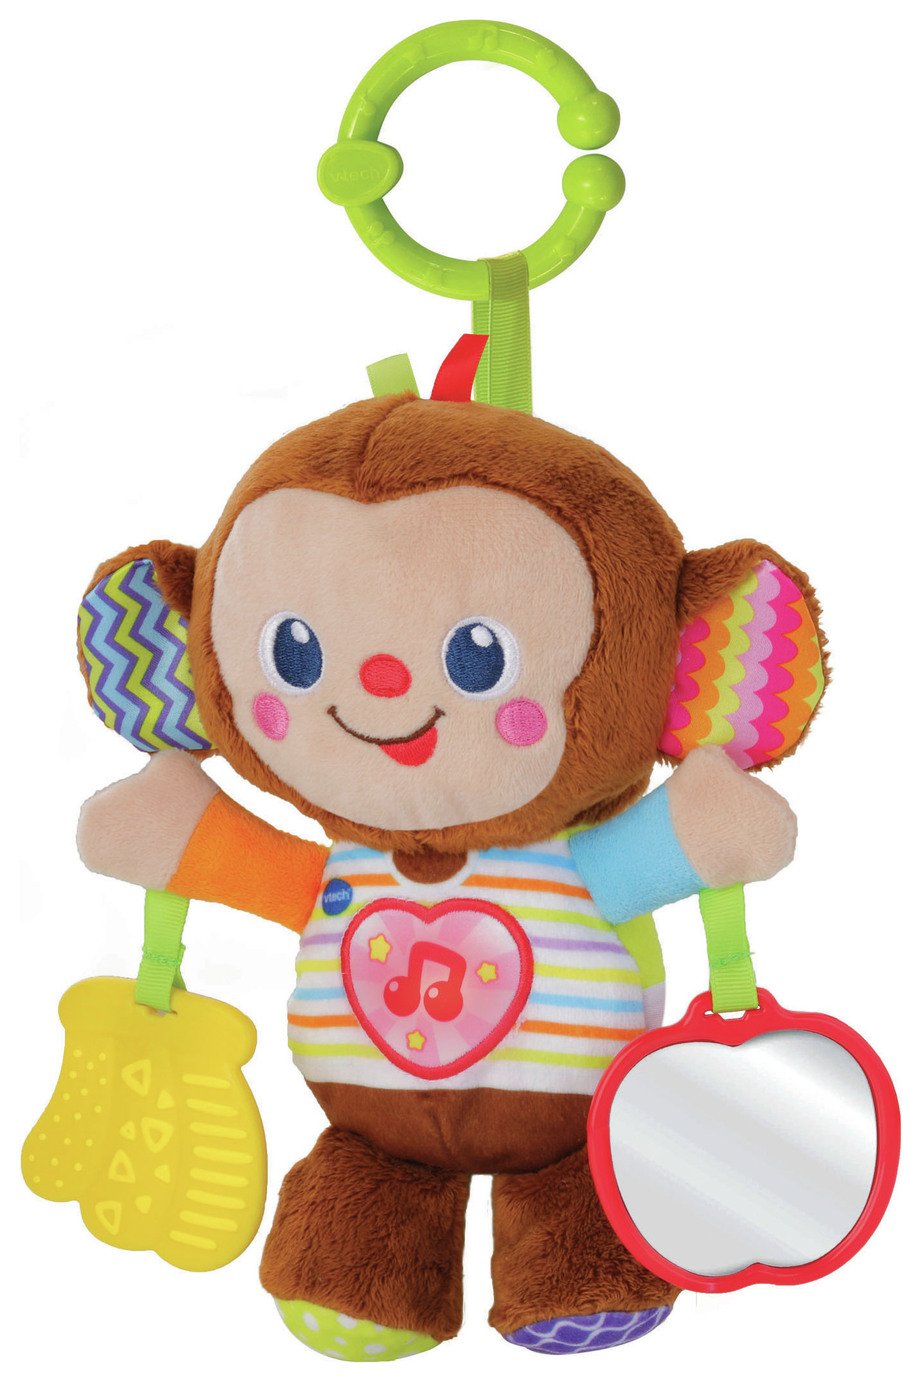 monkey toy argos